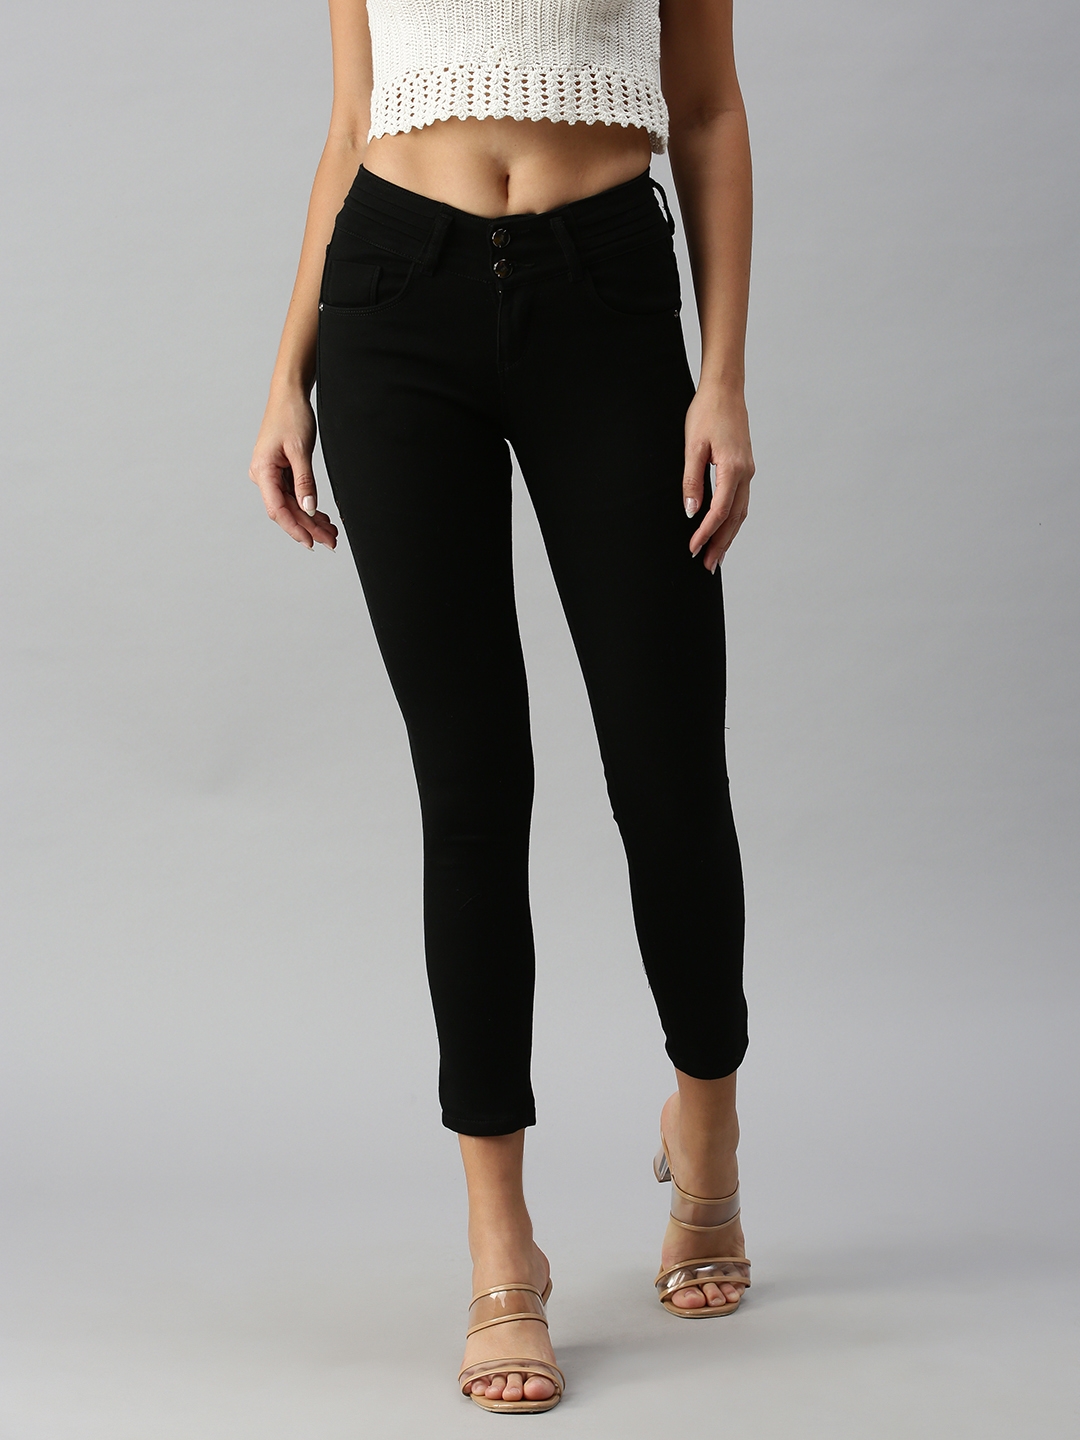 Showoff Women's Skinny Fit Clean Look Black Jeans